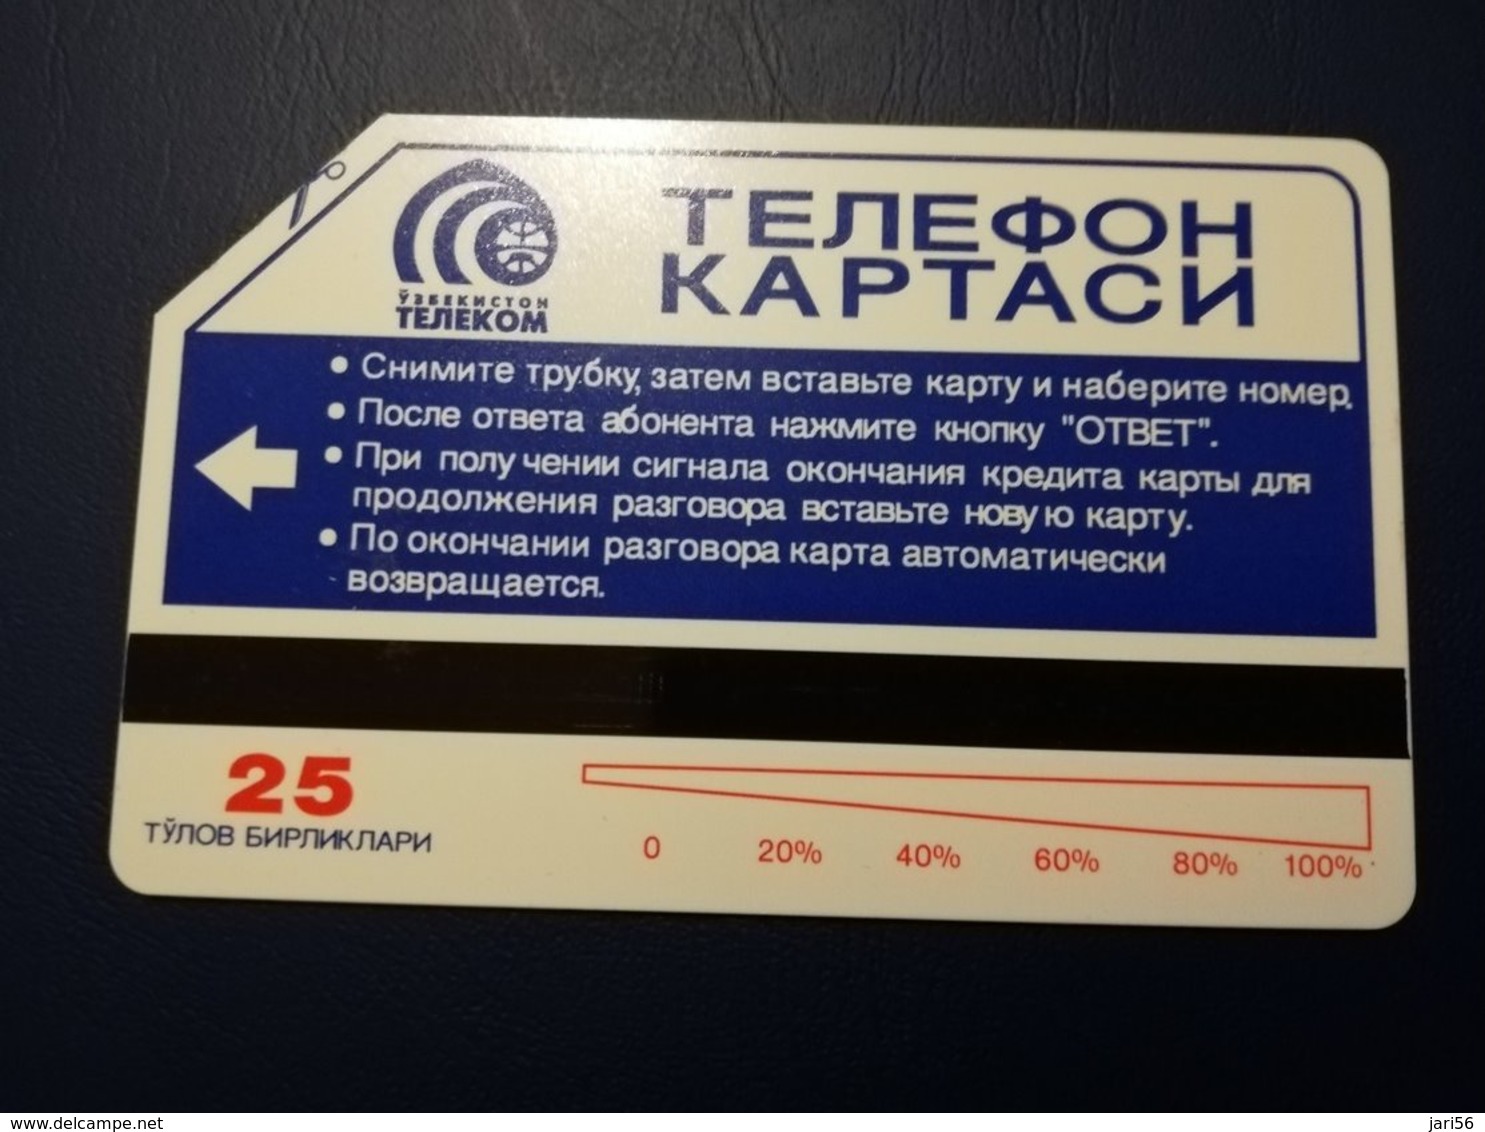 UZBEKISTAN  URMET PATENT CARD 25 UNITS  ** 127** - Belarus